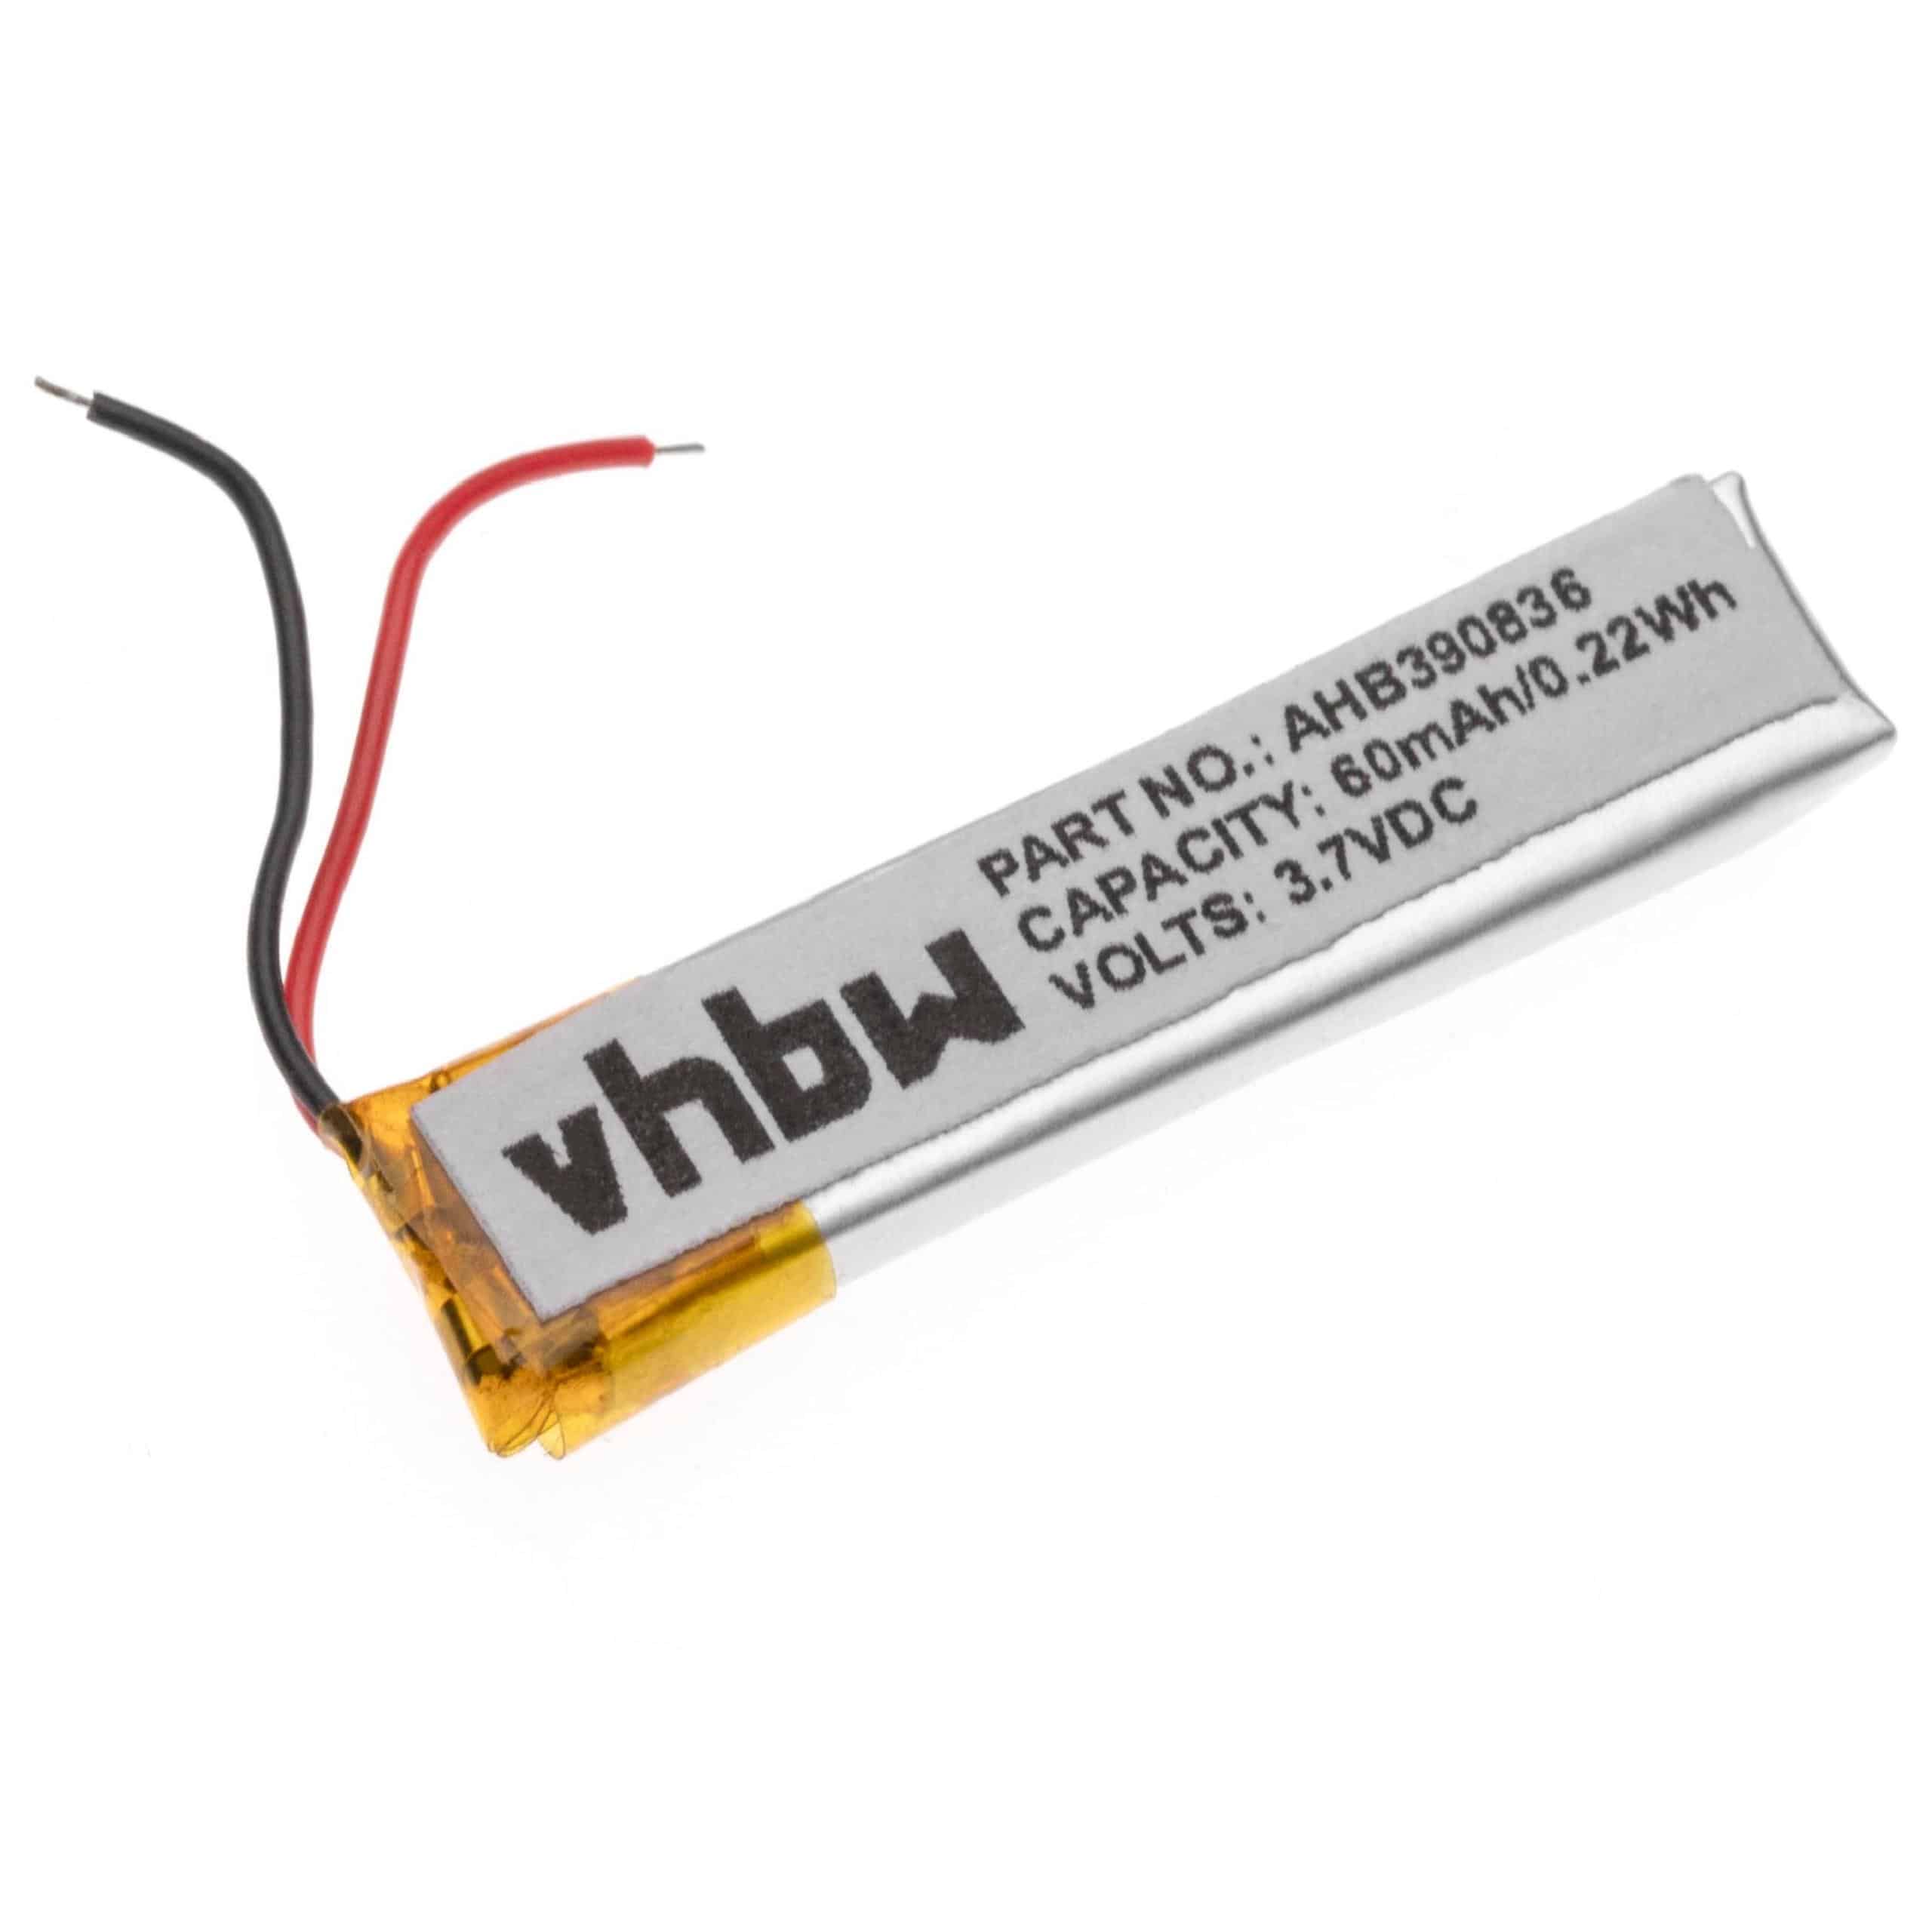 Batería reemplaza Jabra CPL-556, B350735, AHB390836, HS-11 para auriculares Plantronics - 60 mAh 3,7 V Li-poli